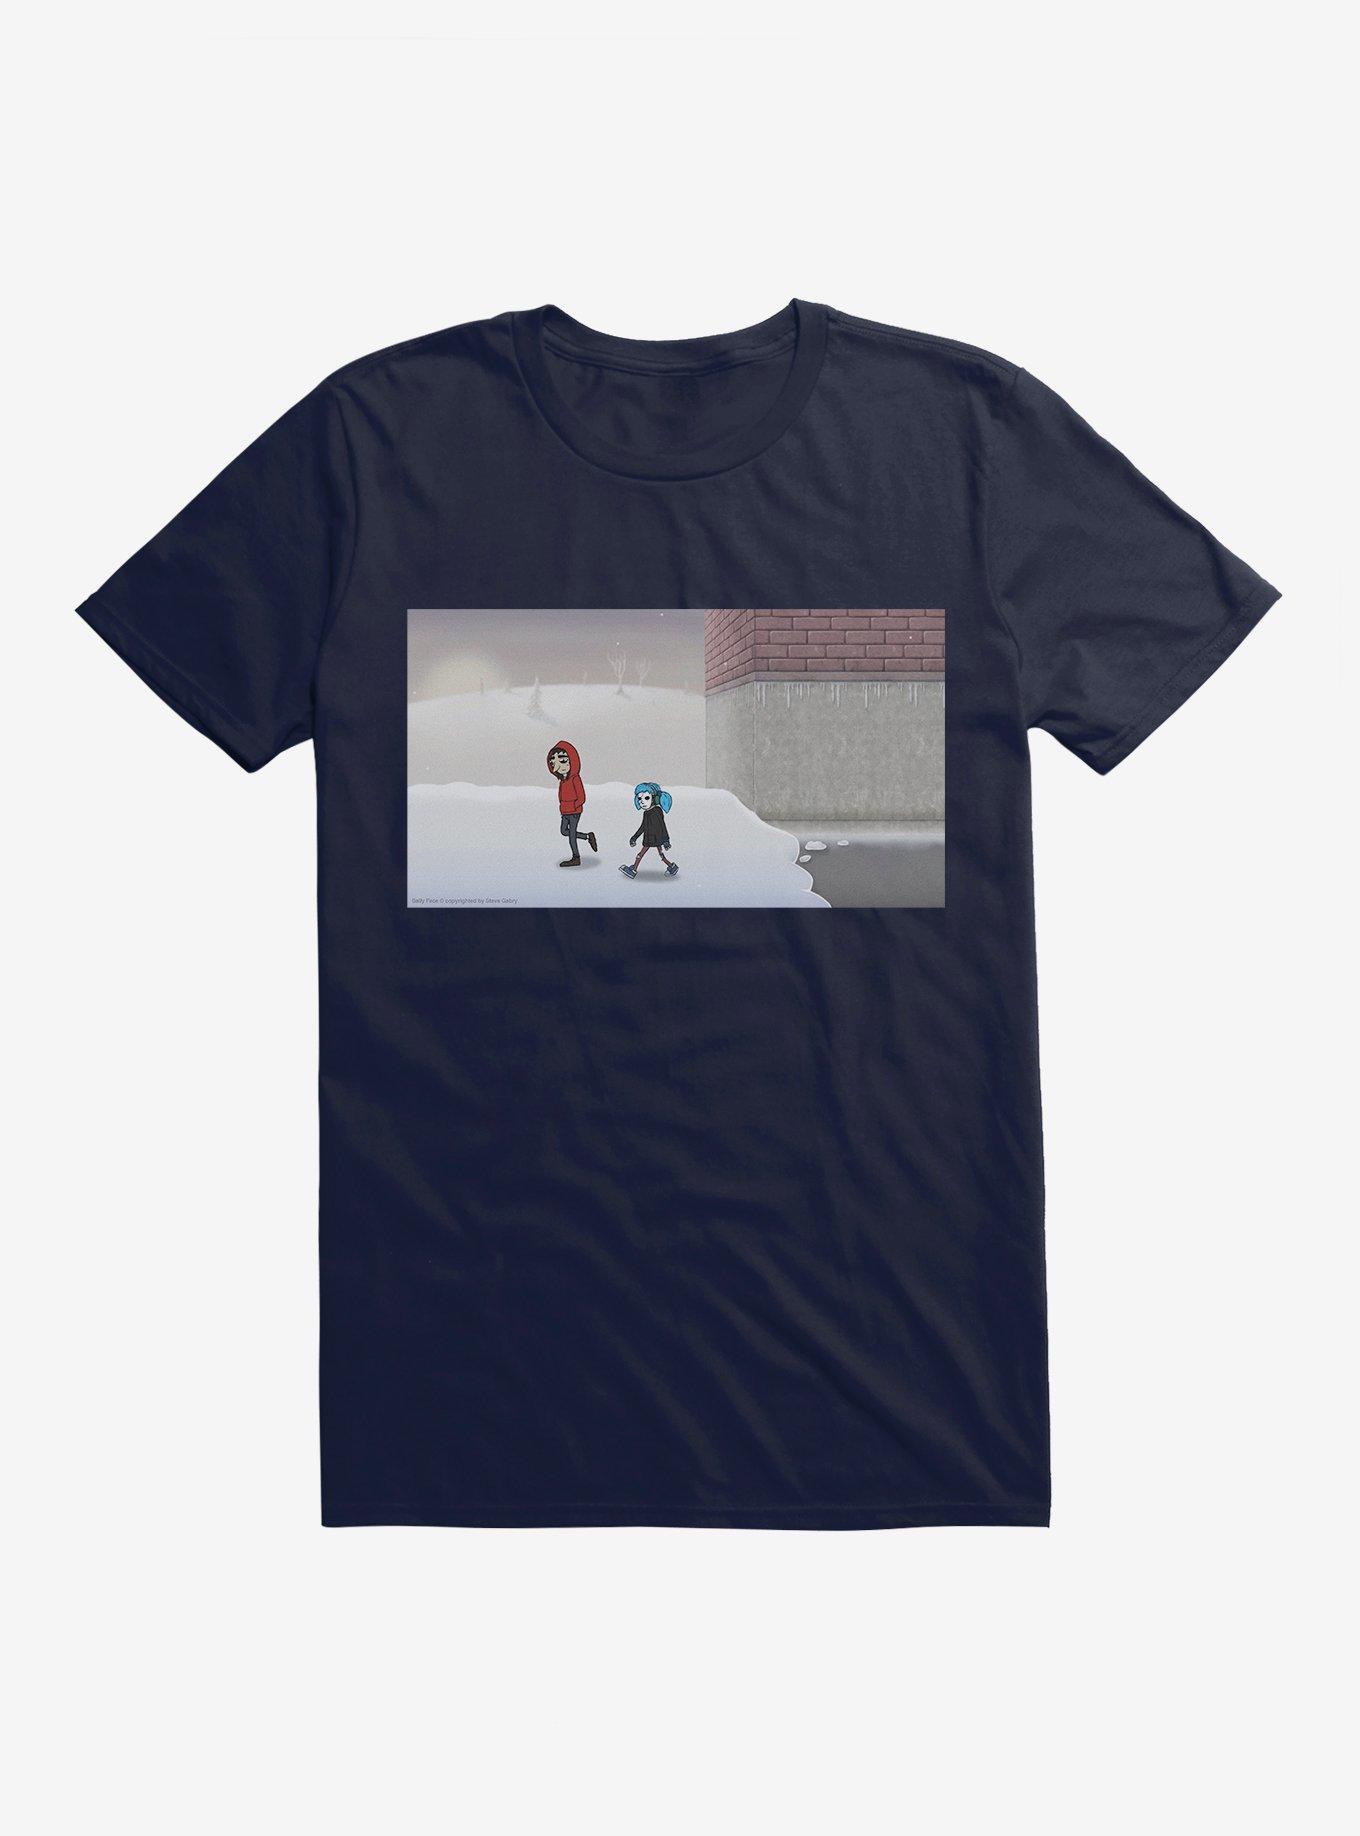 Sally Face Walking Through The Snow T-Shirt, NAVY, hi-res